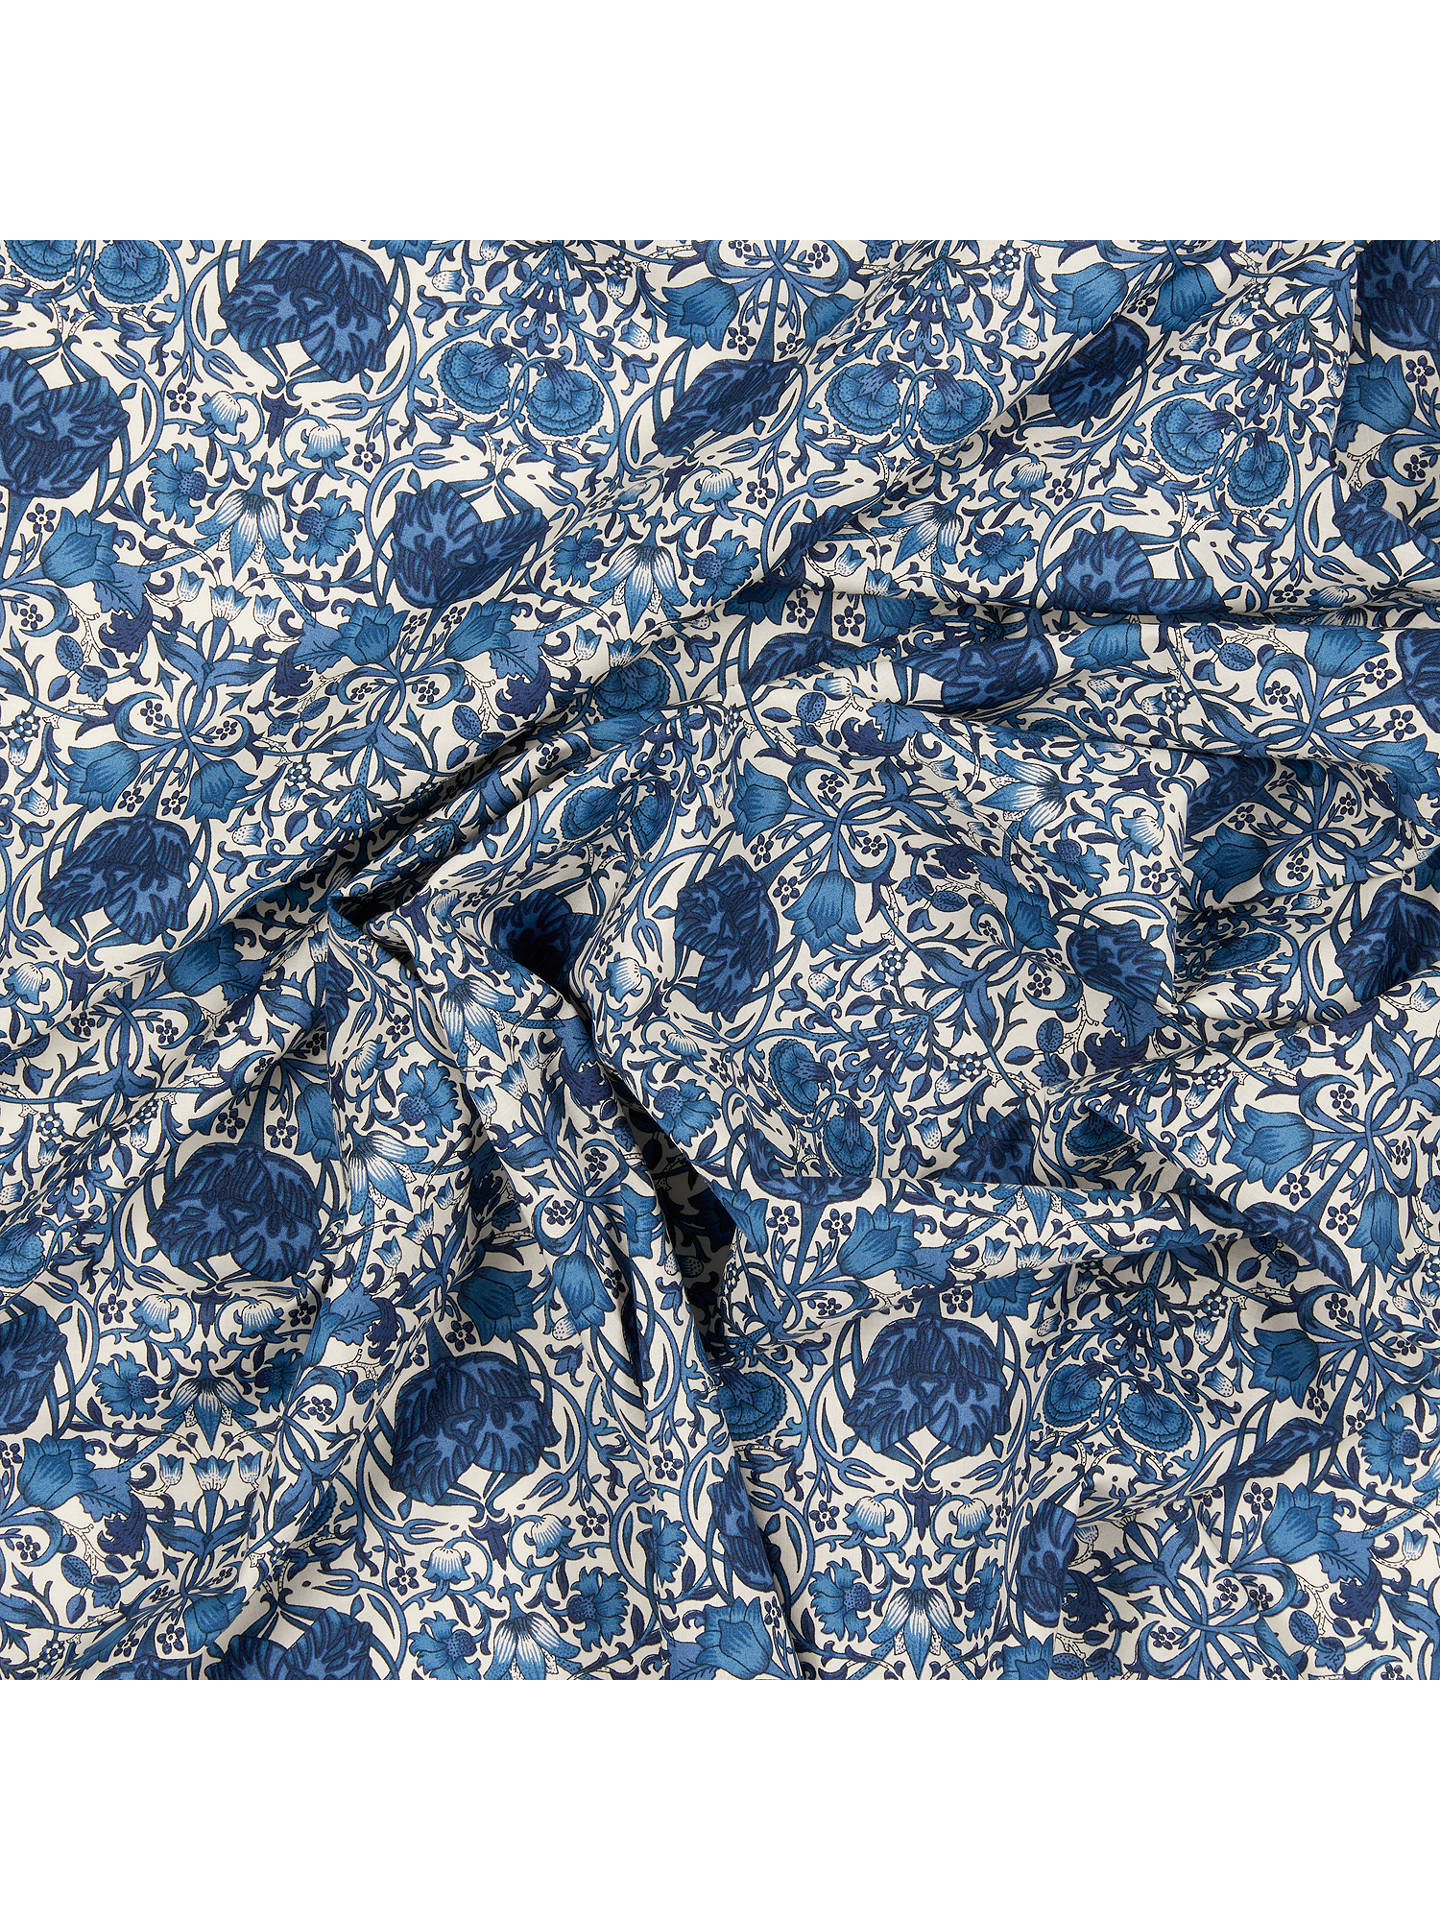 Peter Horton Textiles Art Deco Print Fabric, Blue at John Lewis & Partners